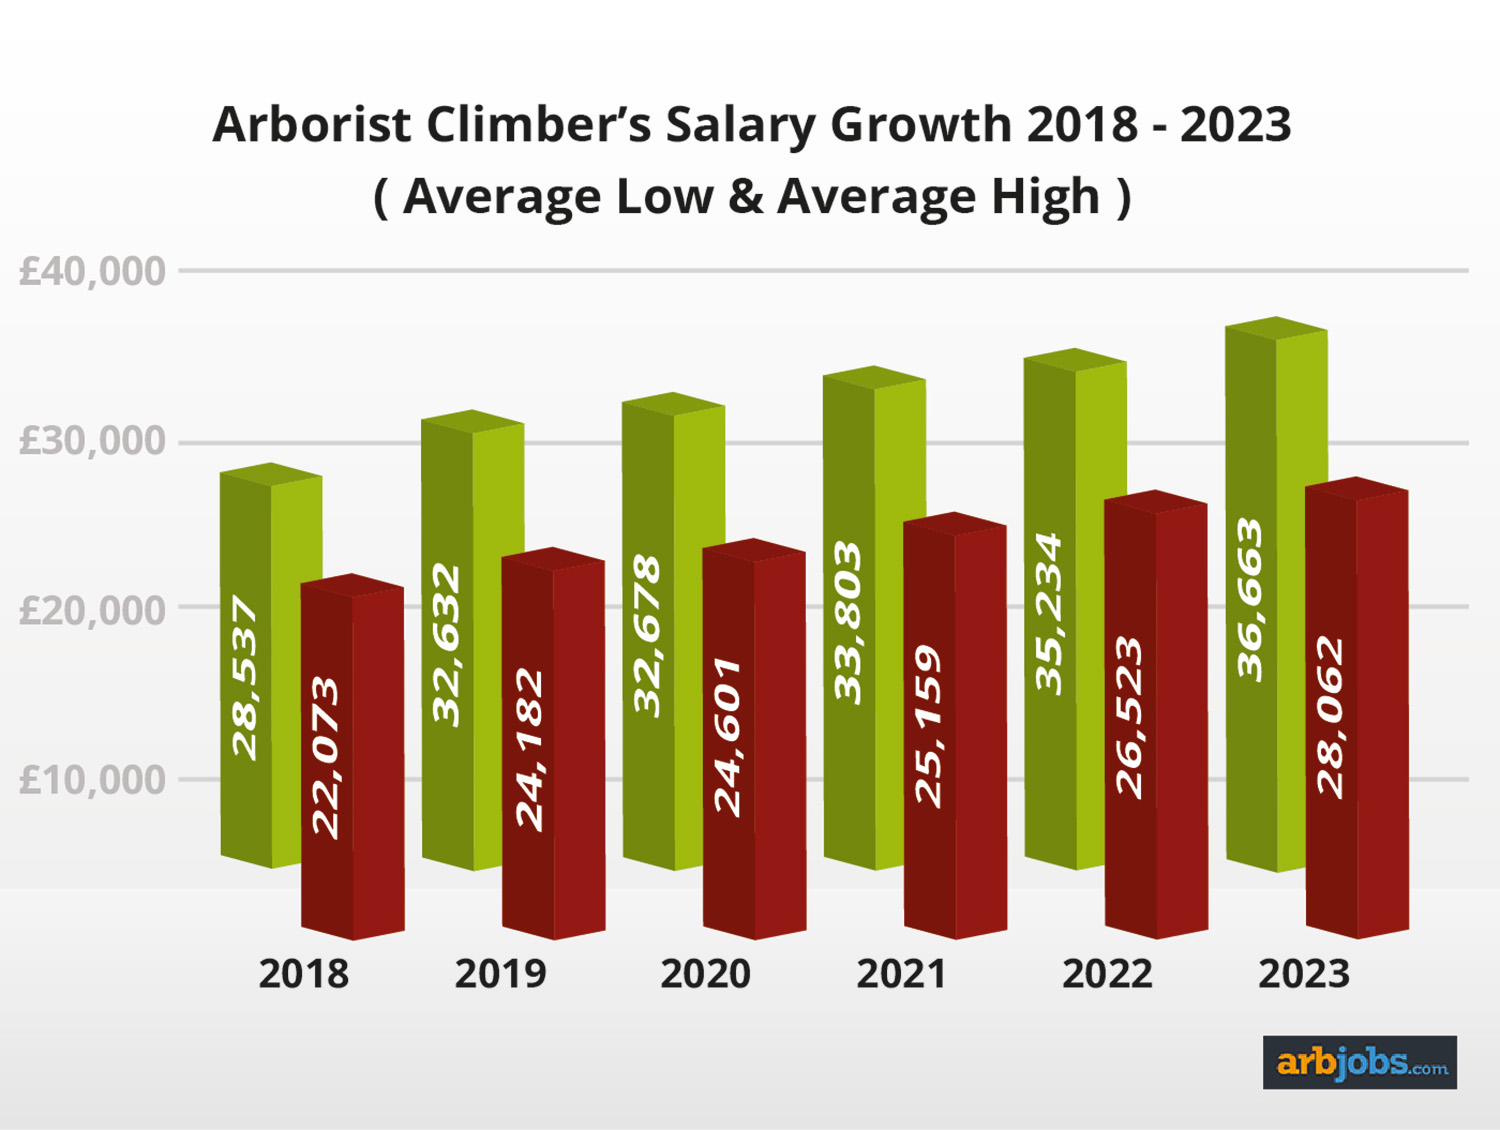 Arborist Climber’s Salary Growth 2018-2023 (Average Low & Average High)